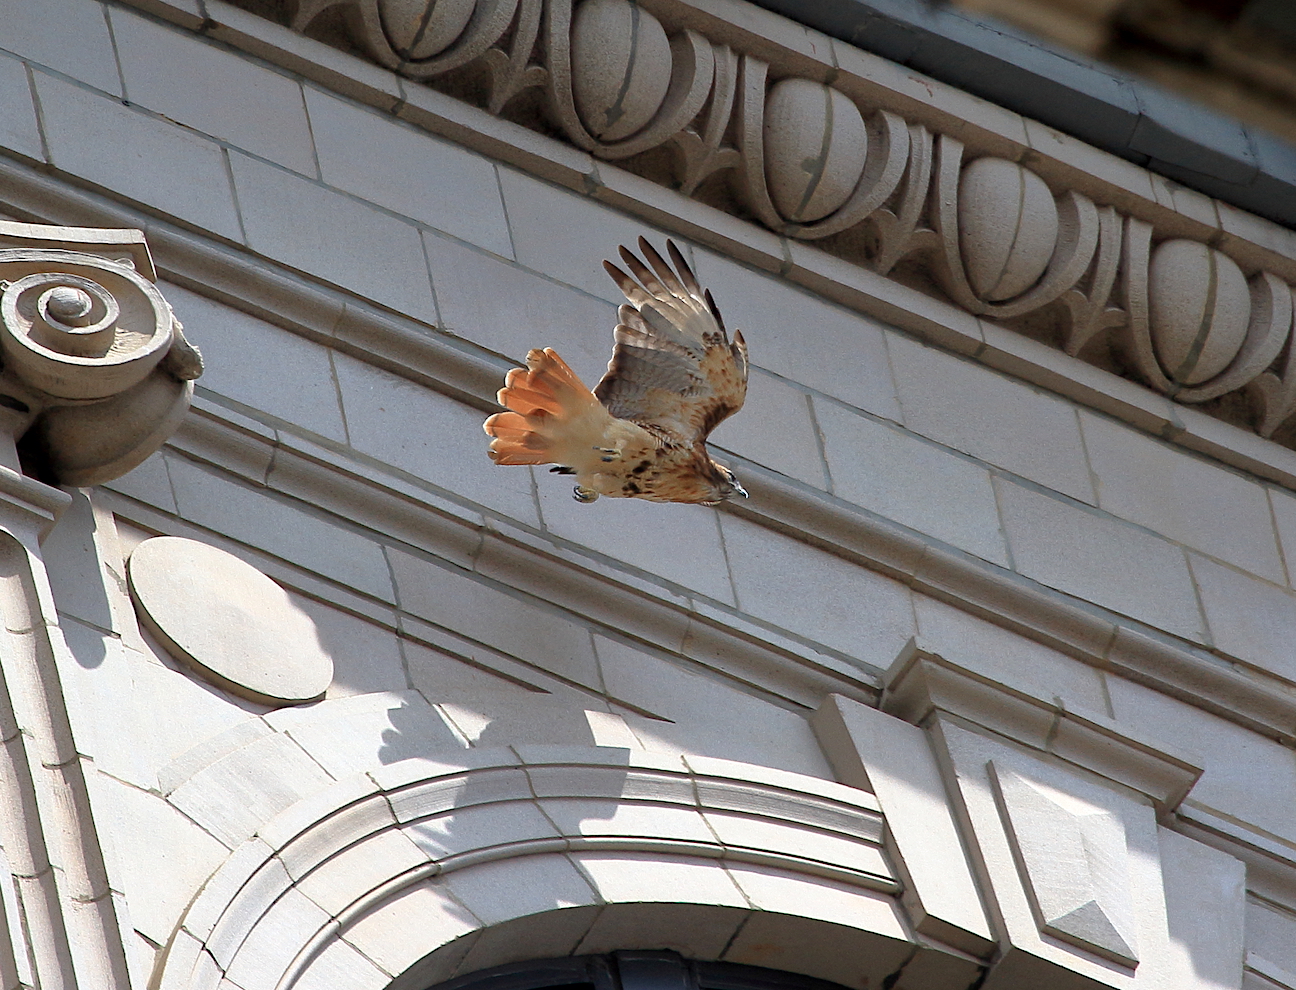 Washington Square Hawk Sadie flying along building